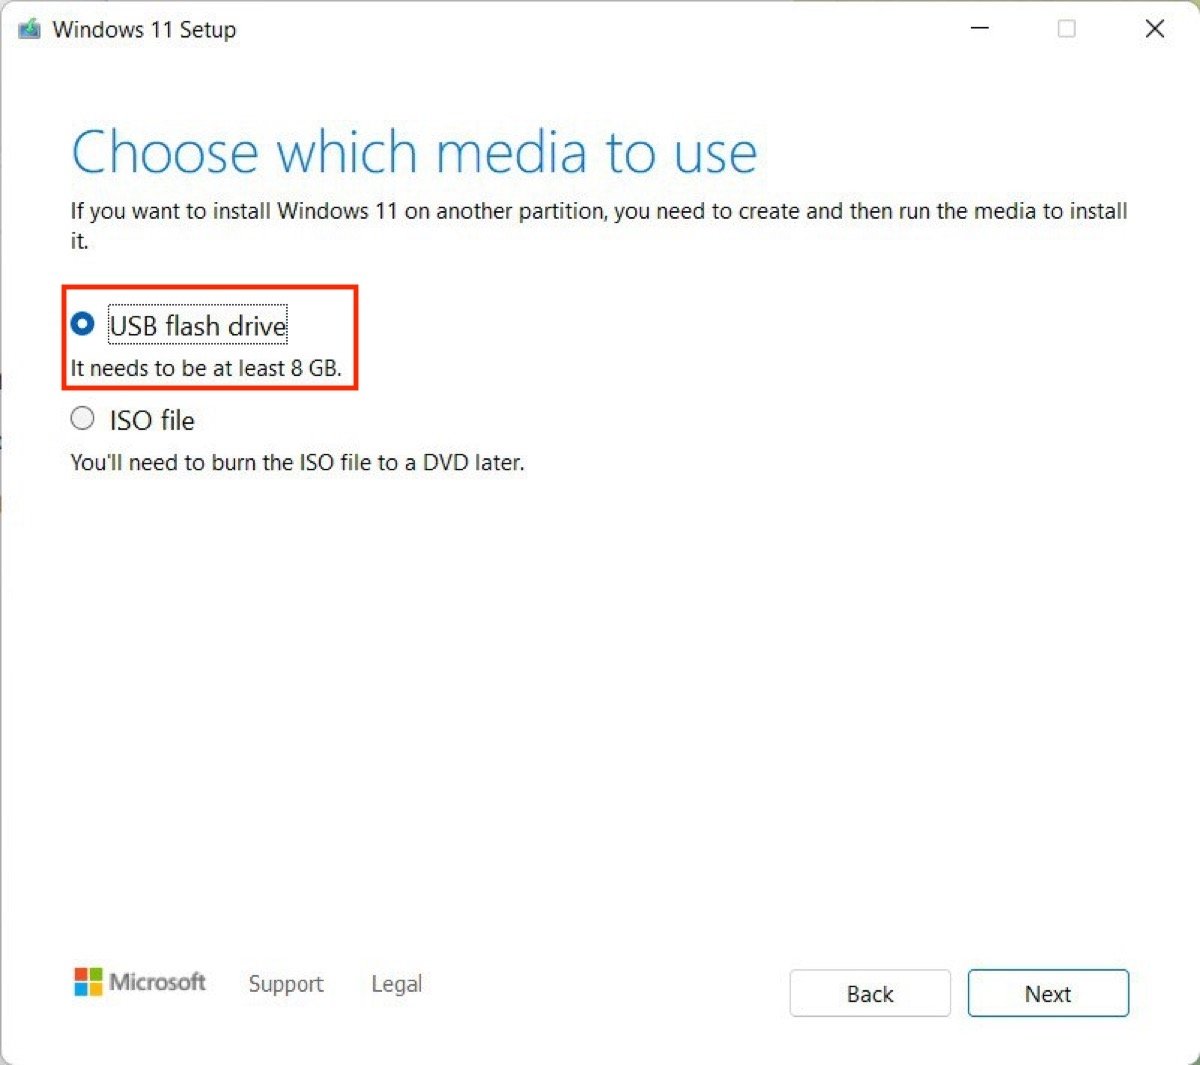 Select the USB to save Windows 11